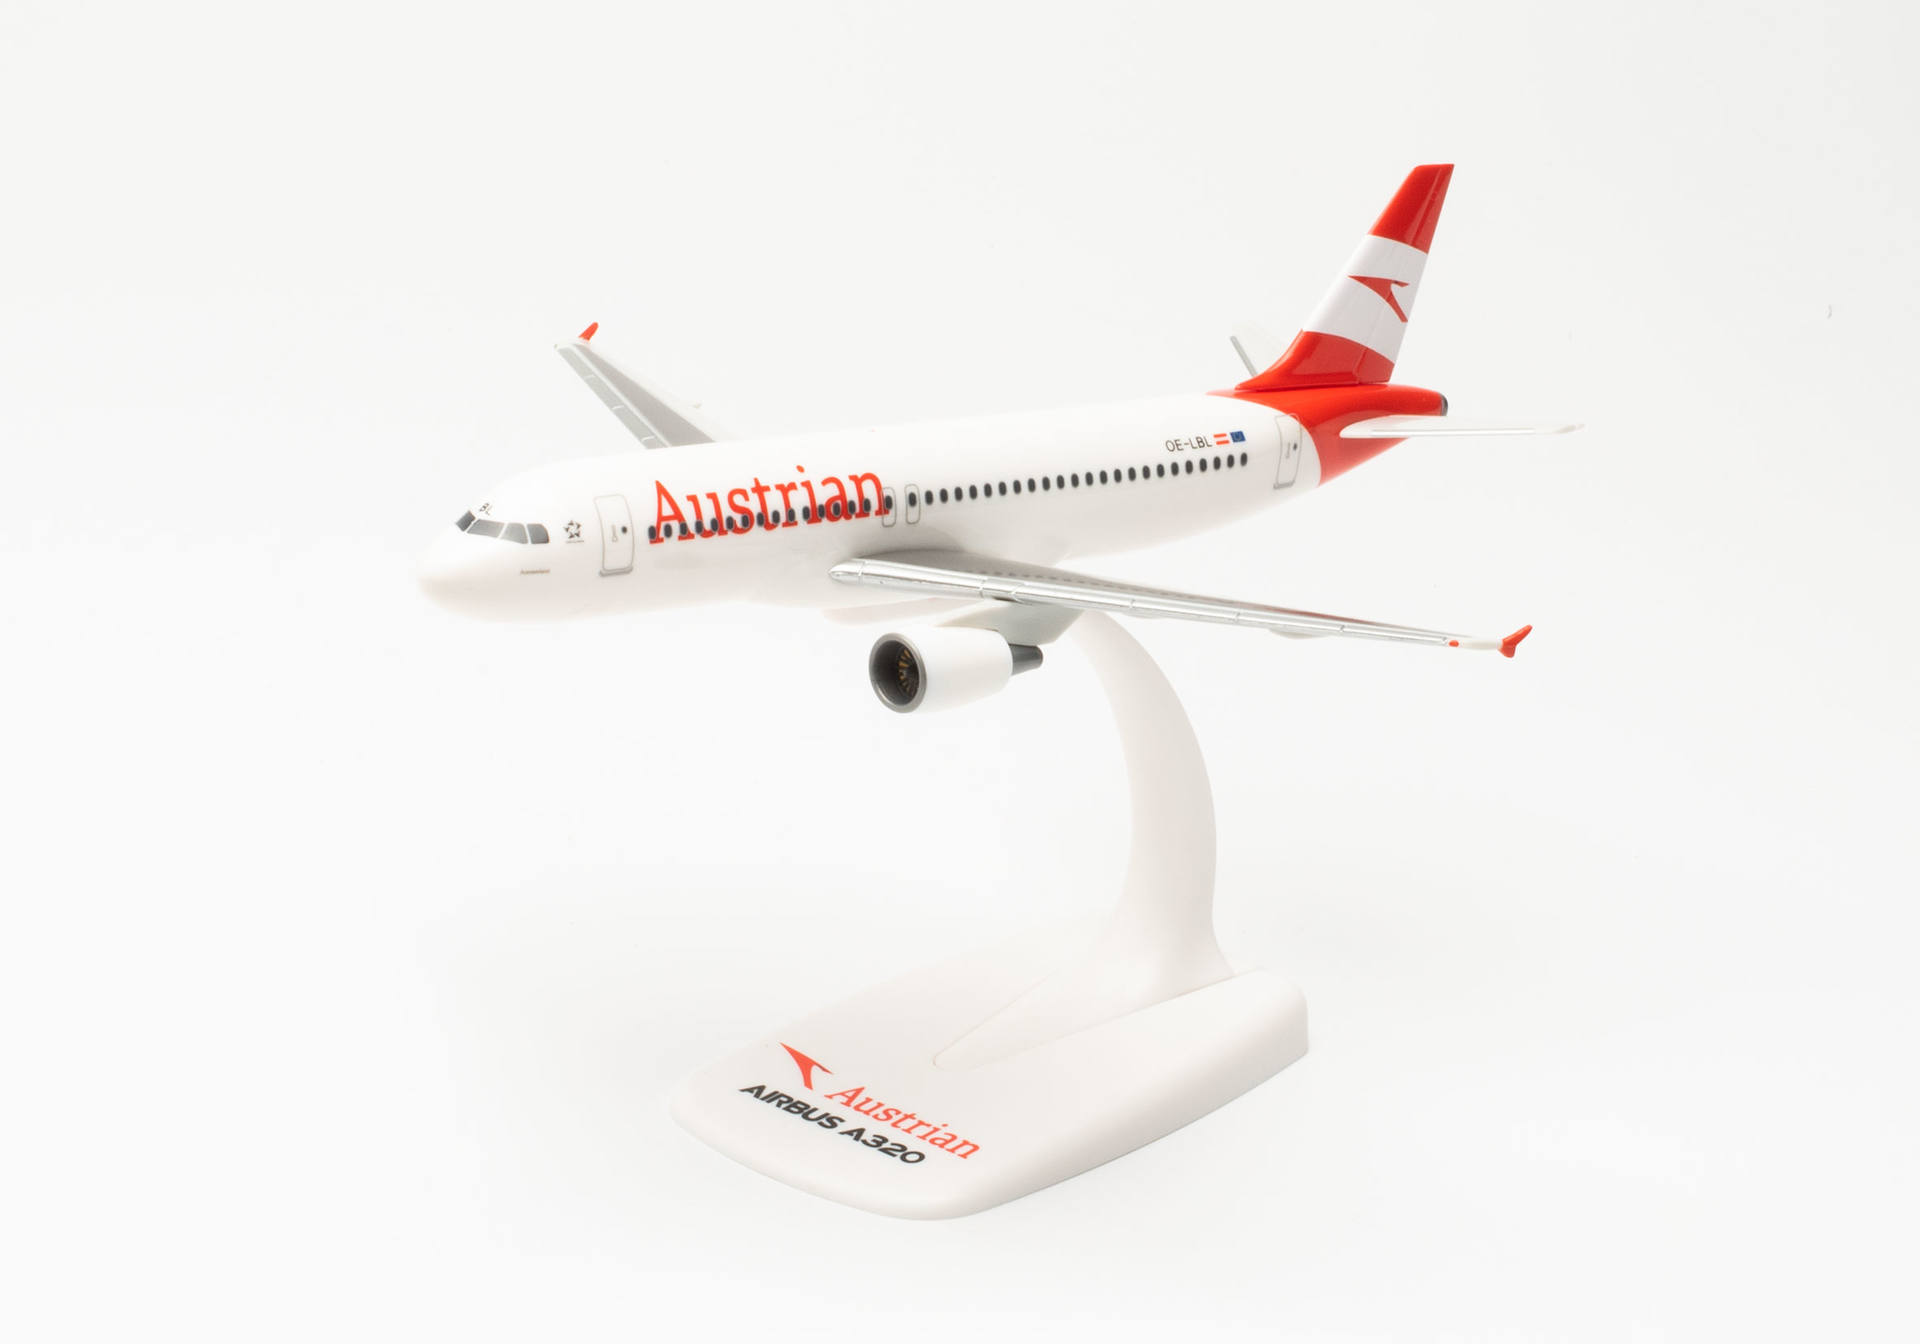 Austrian Airlines Airbus A320 – OE-LBL “Ausseerland”